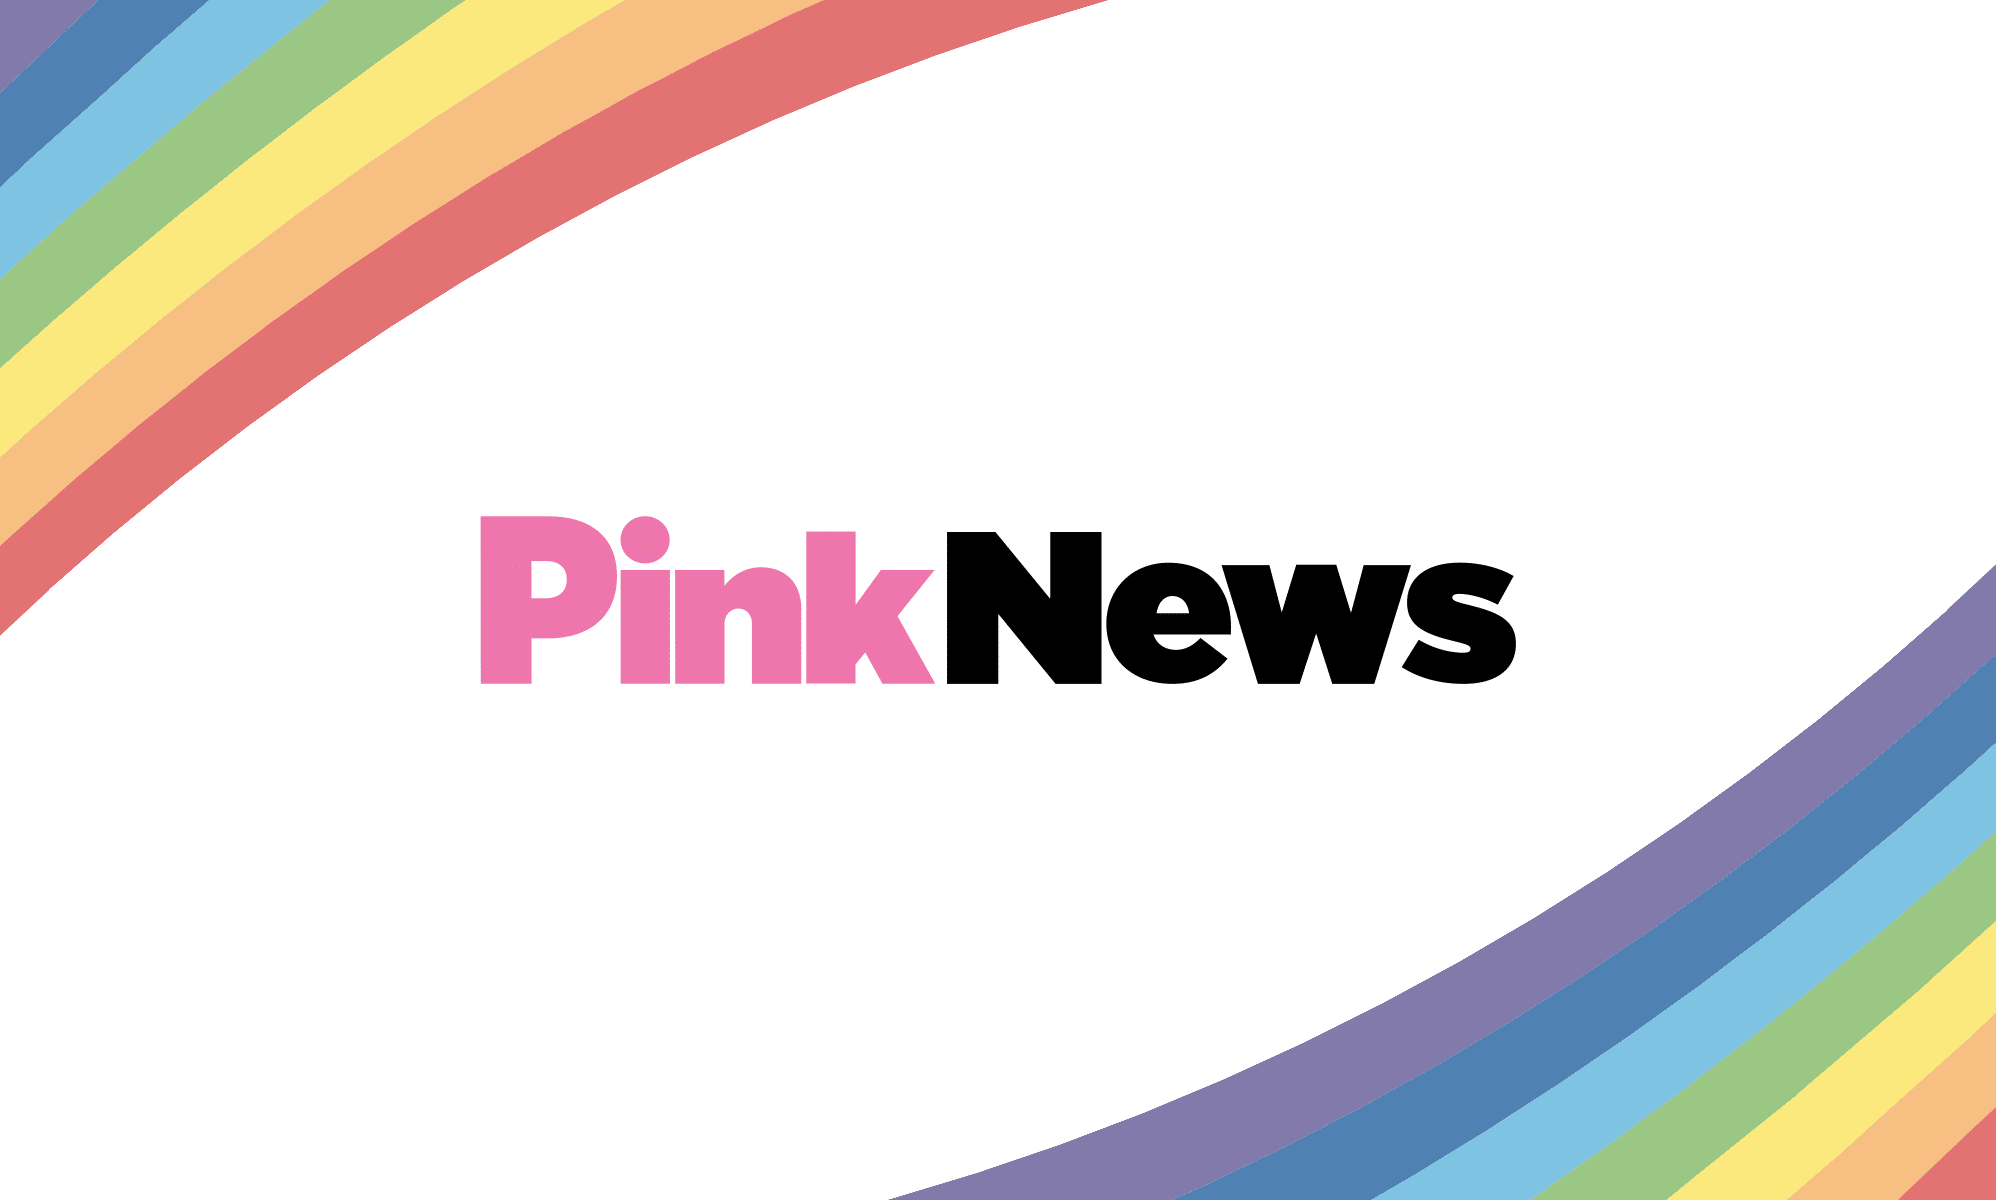 Transparent star Jeffrey Tambor dedicates award to trans people everywhere